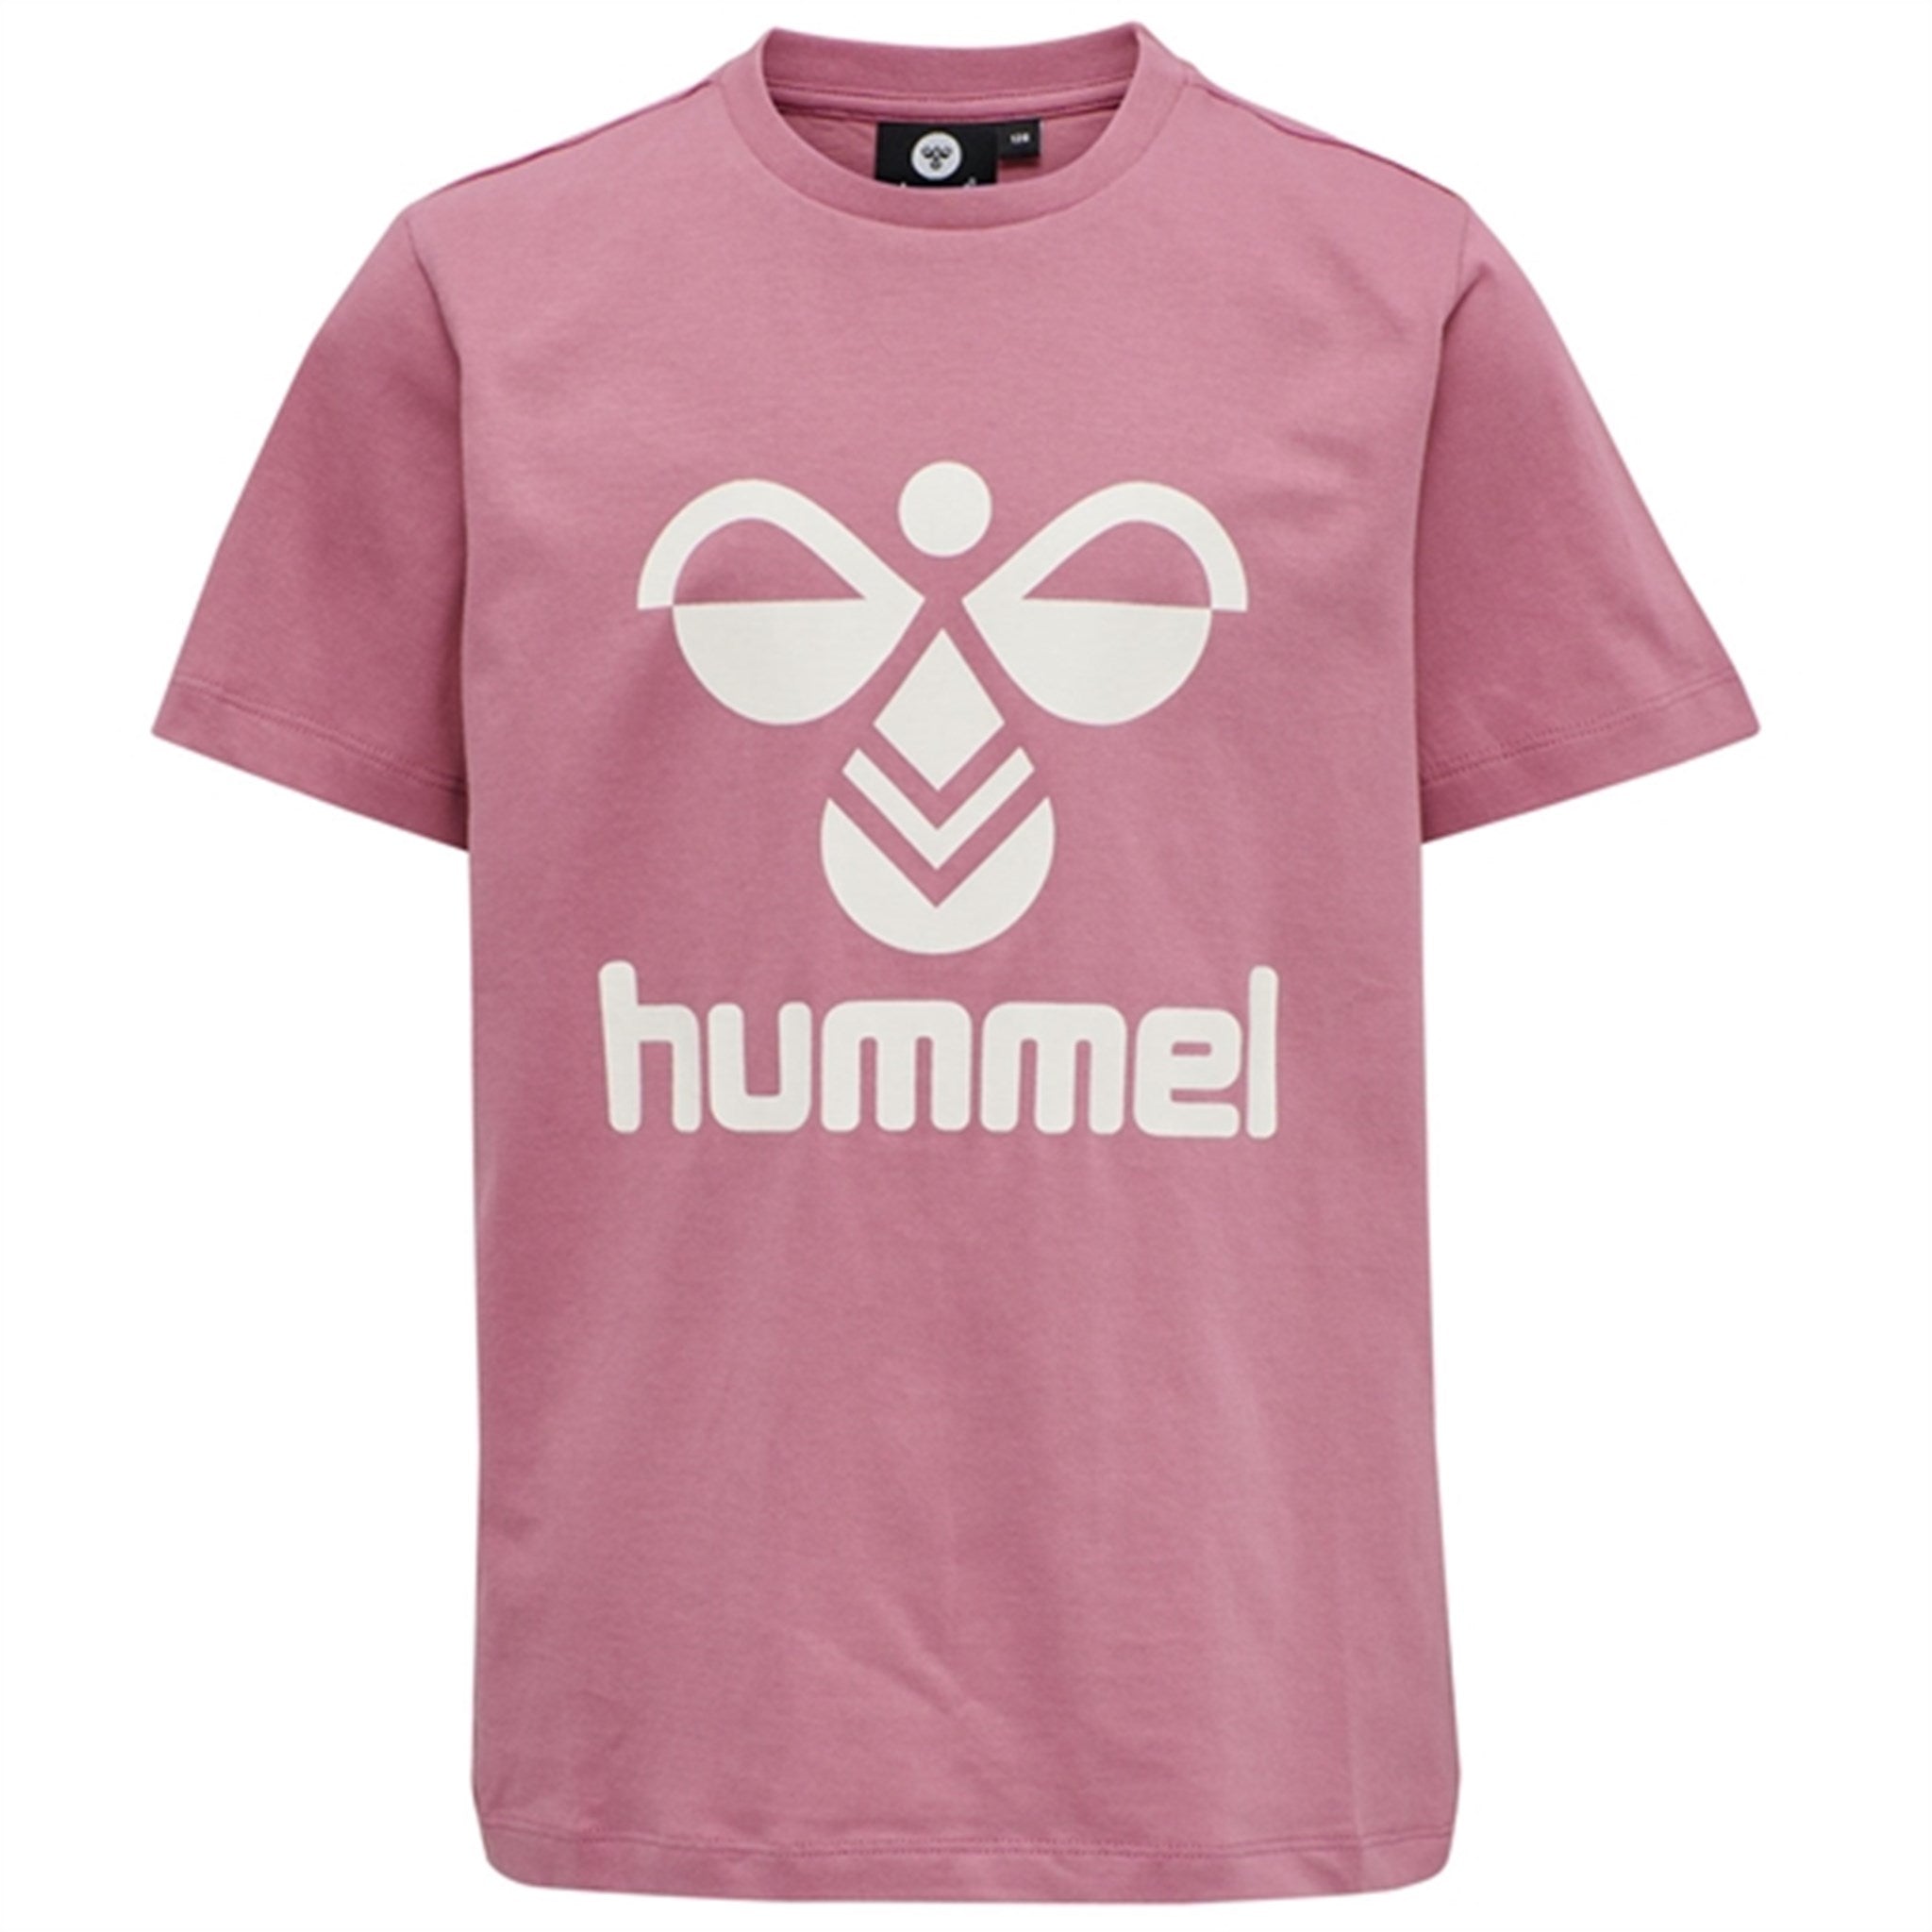 Hummel Heather Rose Tres T-Shirt S/S